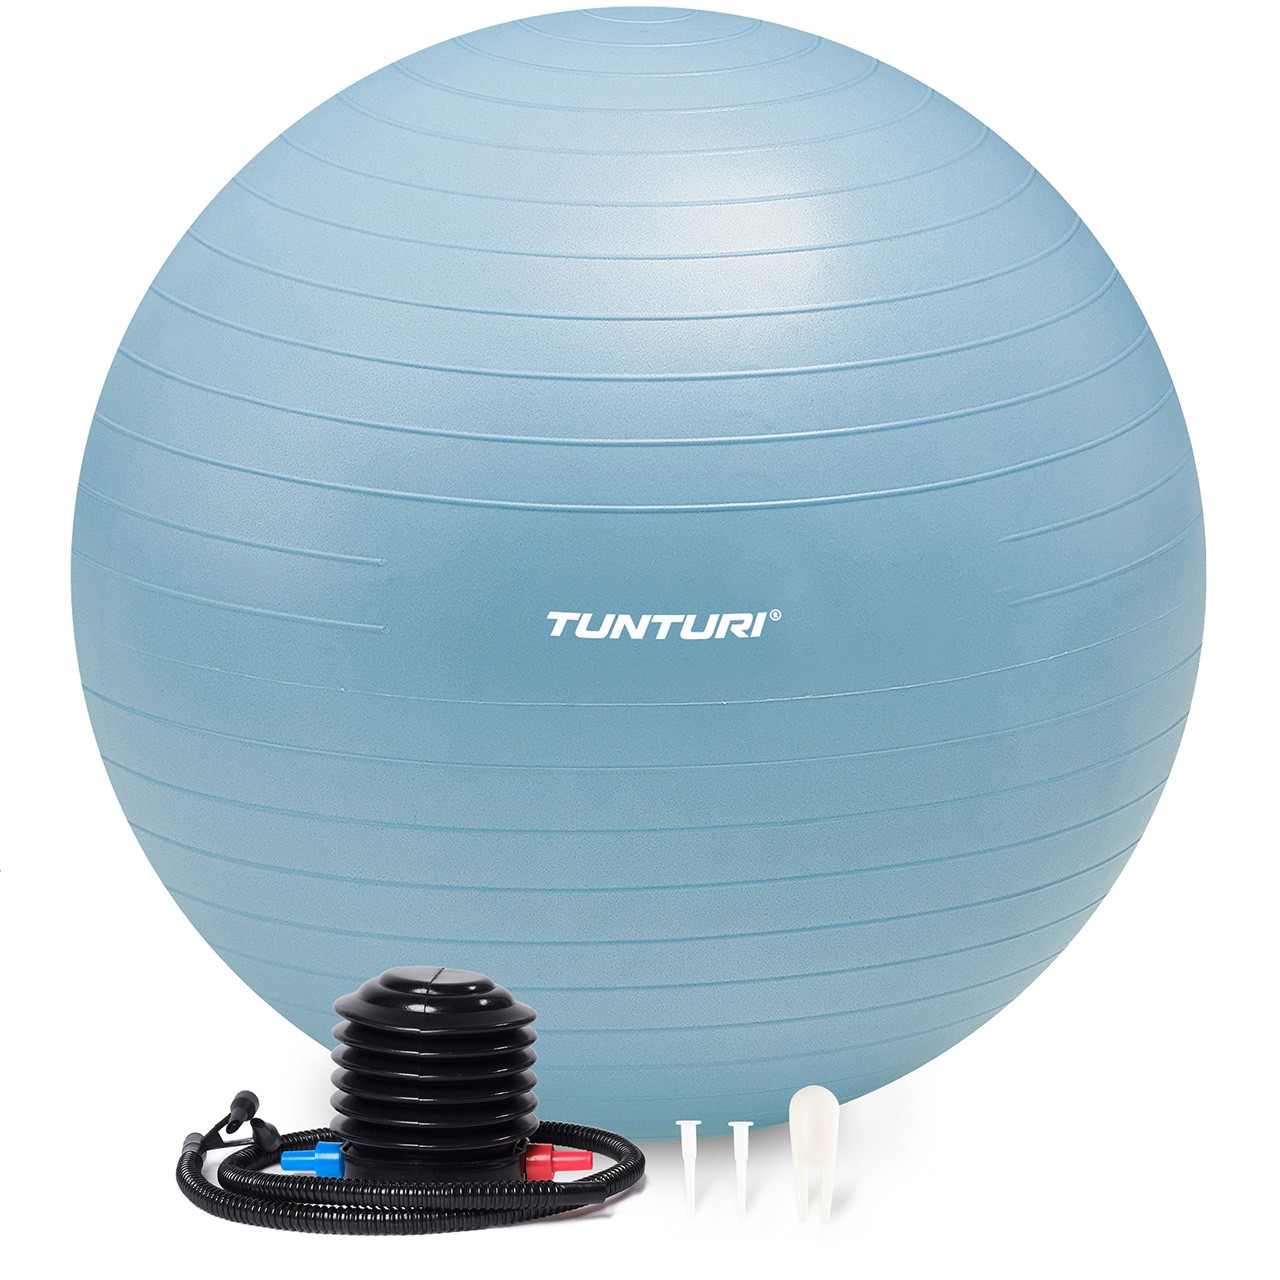 Tunturi Gym Ball - Anti Burst ABS 75 cm light blue